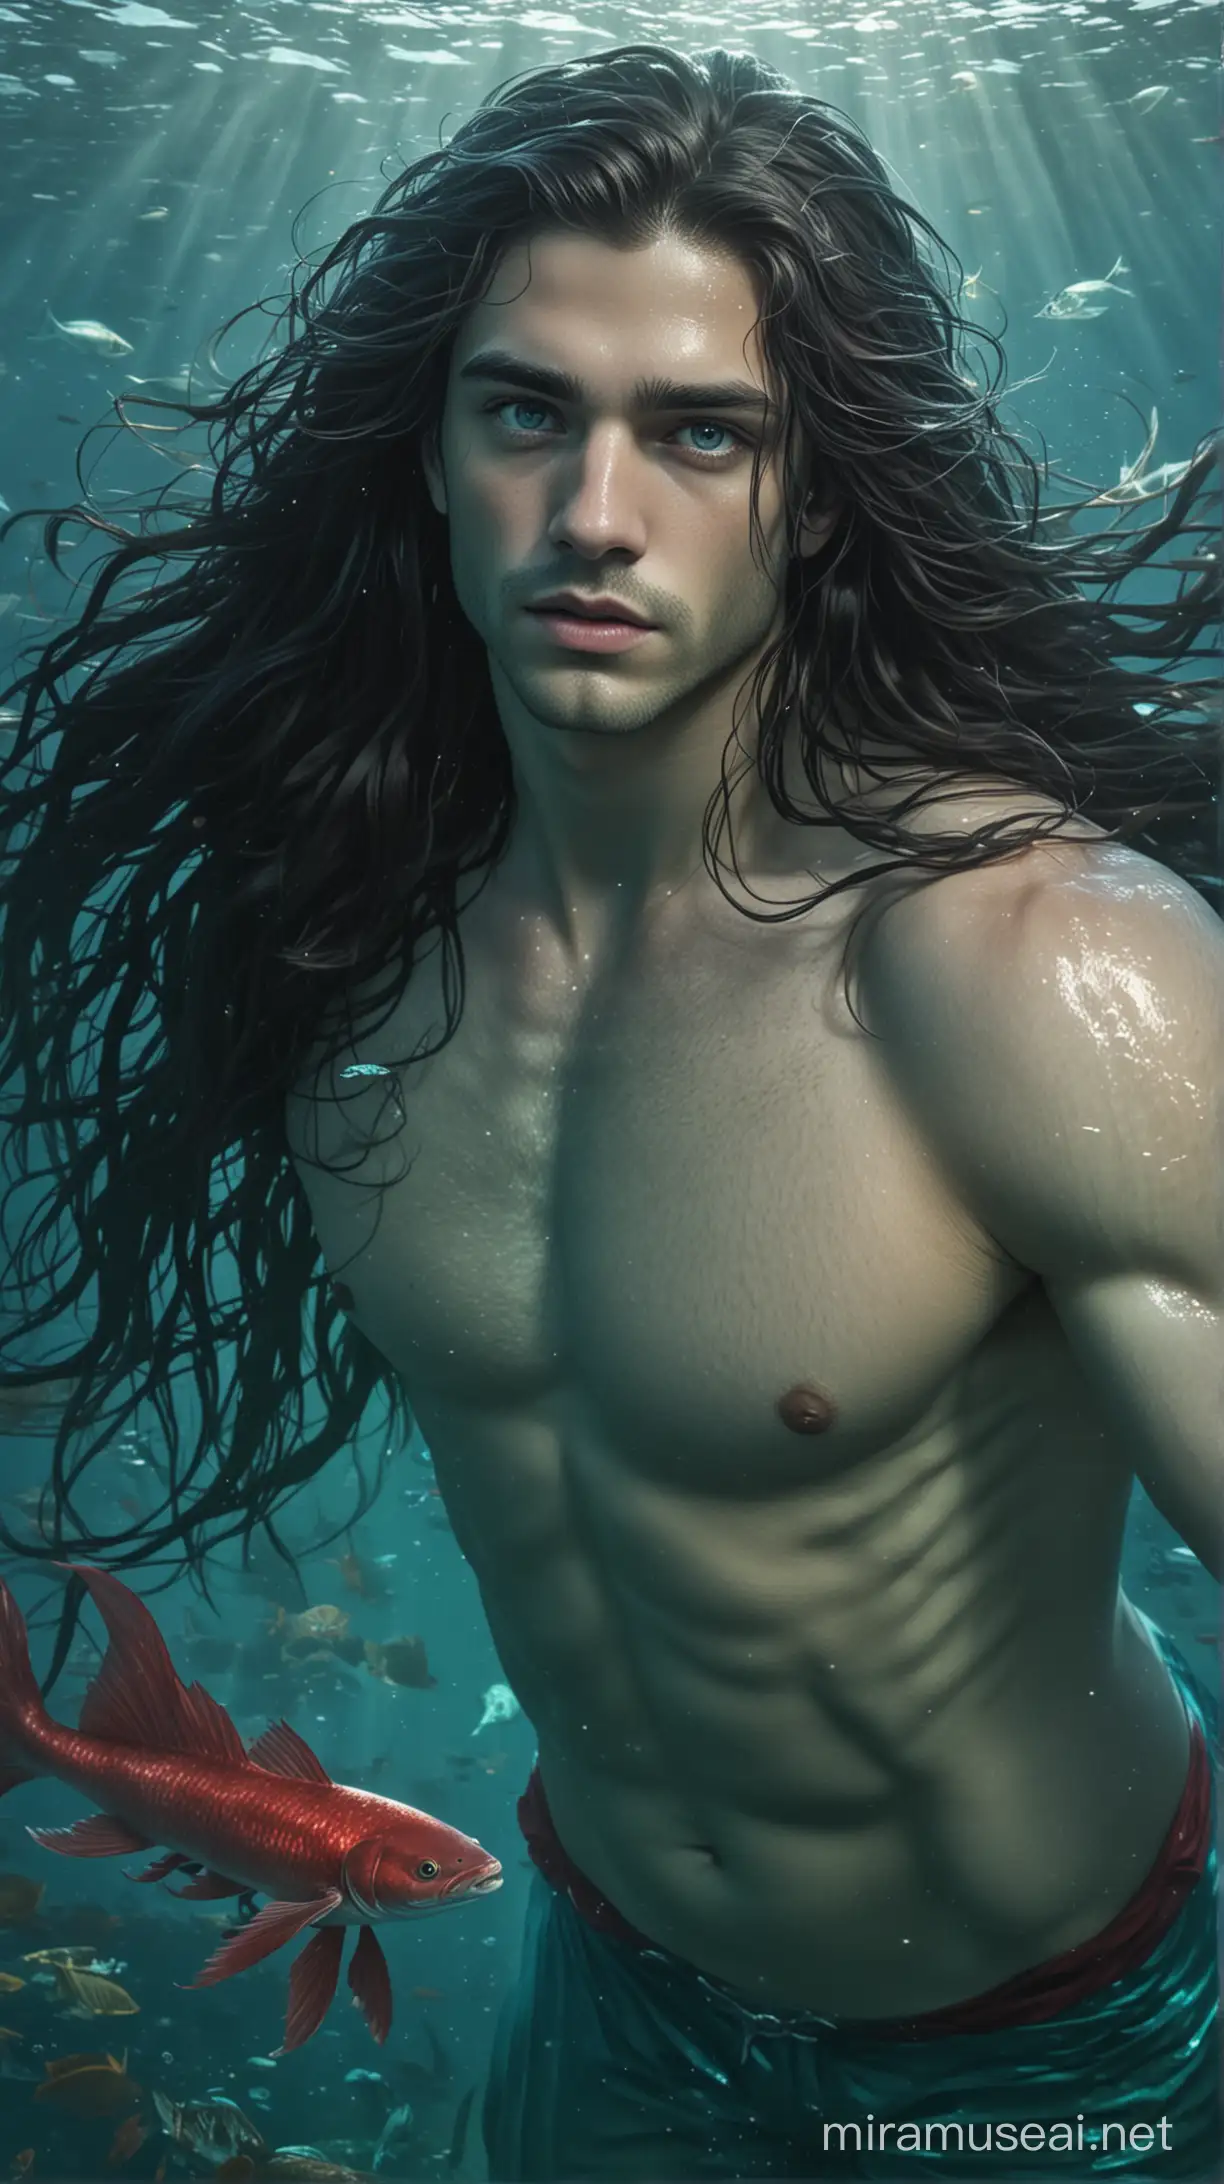 Enigmatic Merman with Long Dark Hair and LightBlue Eyes in TealRed Underwater Realm